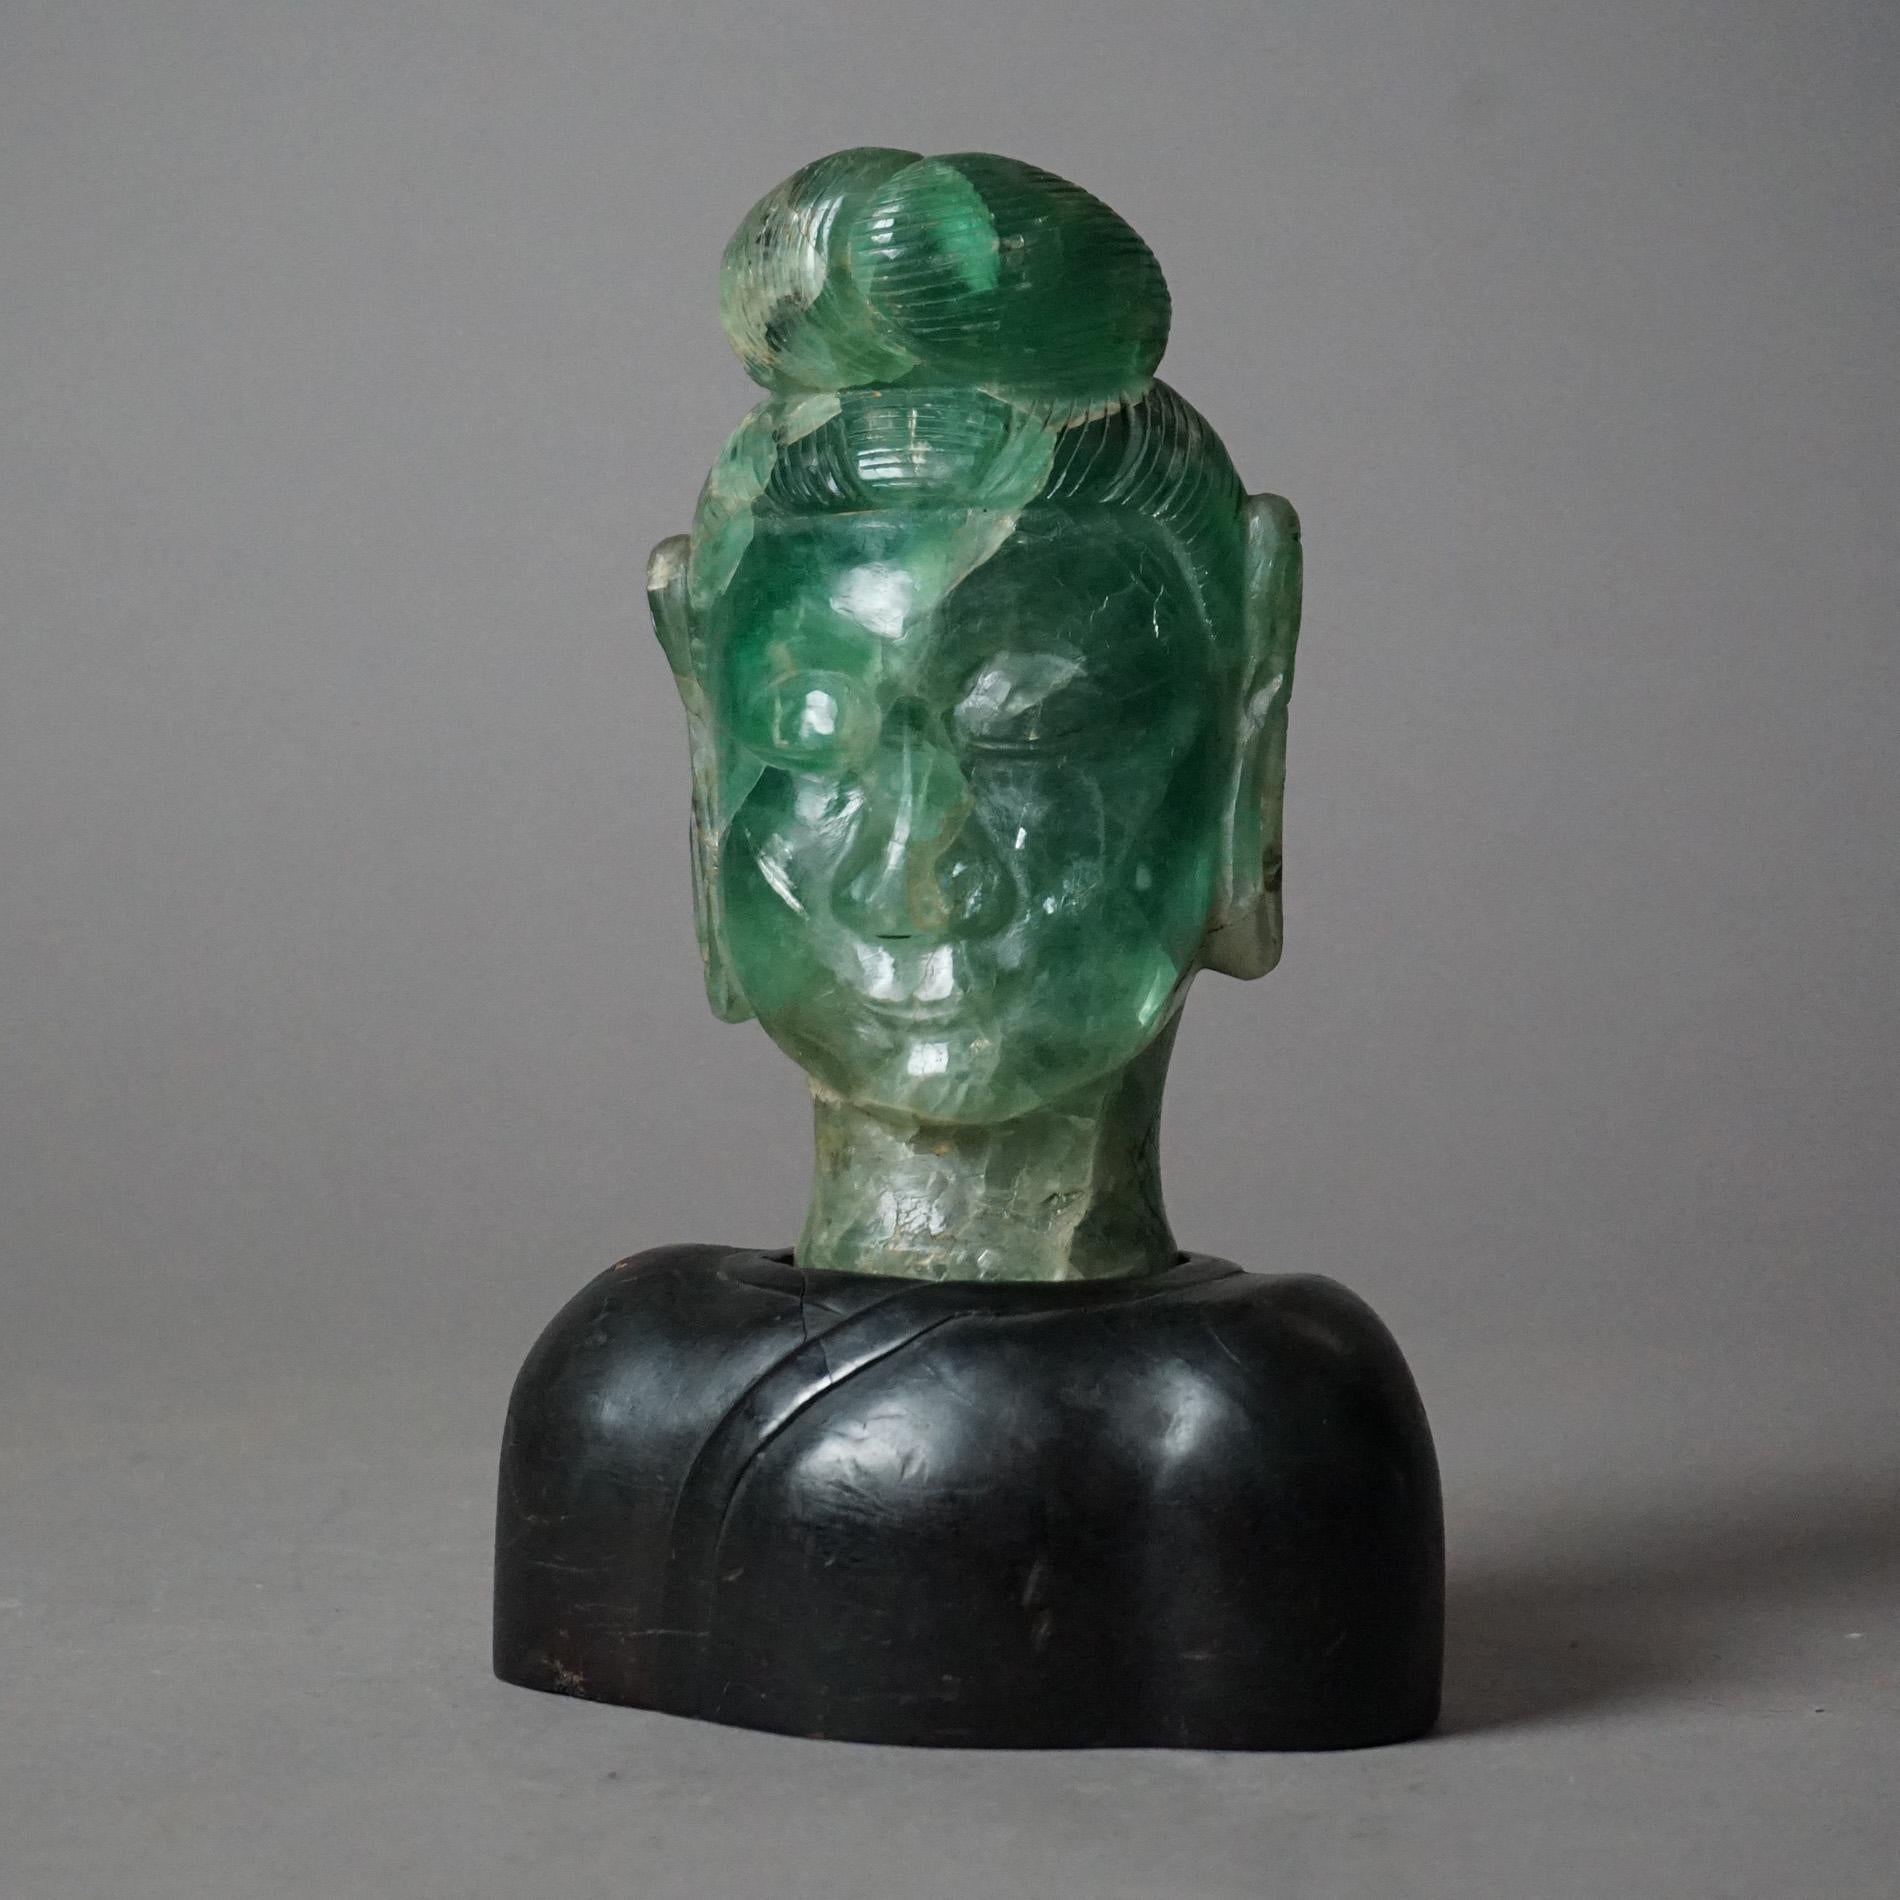 Antique Asian carved jade or quartz Buddha head sculpture on hardwood base circa 1920

Measures - 10